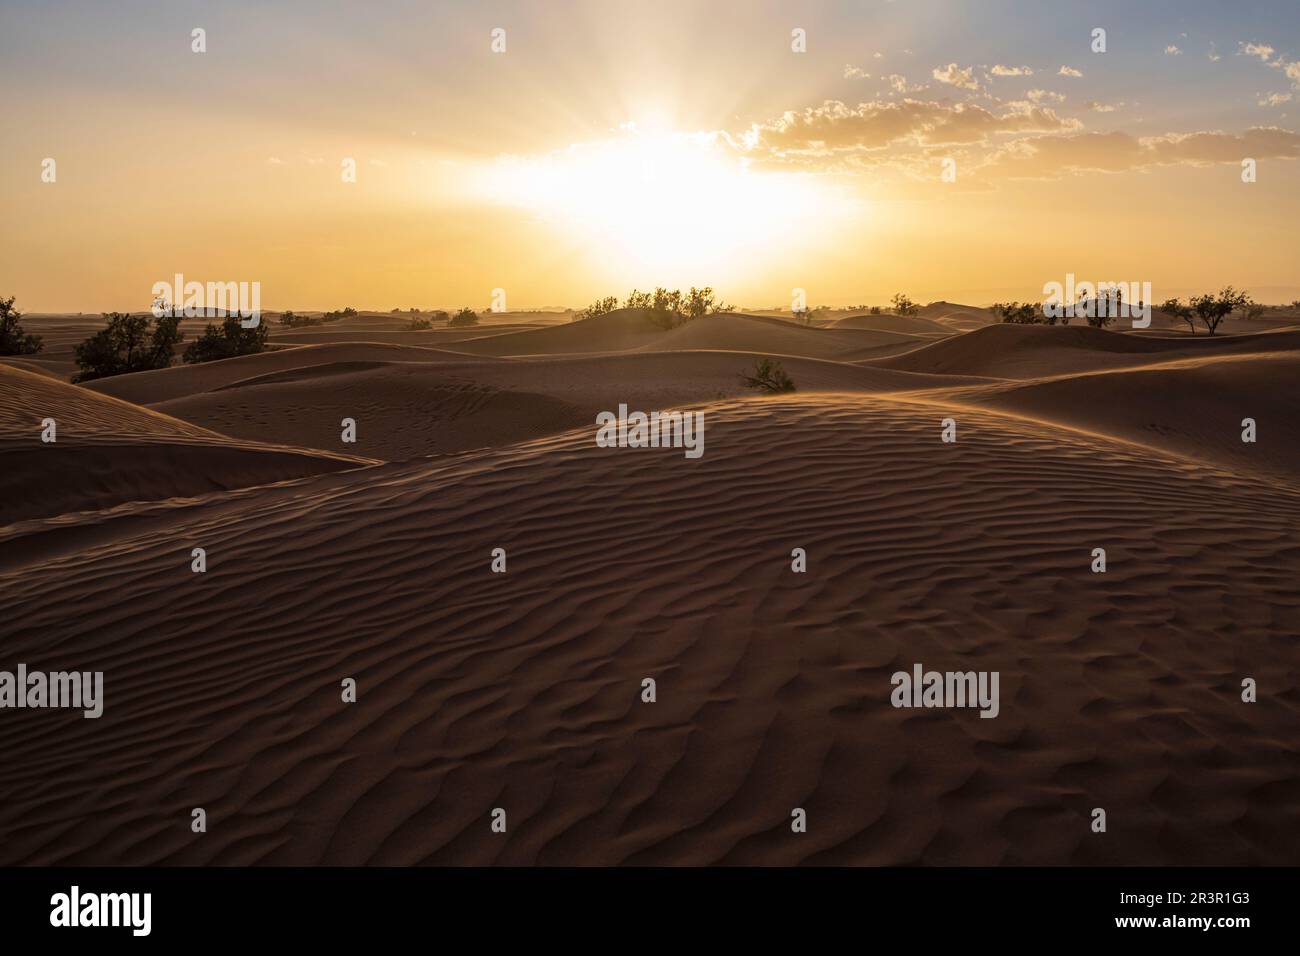 large dunes in M'Hamid, Zagora region, Morocco, Africa. Stock Photo